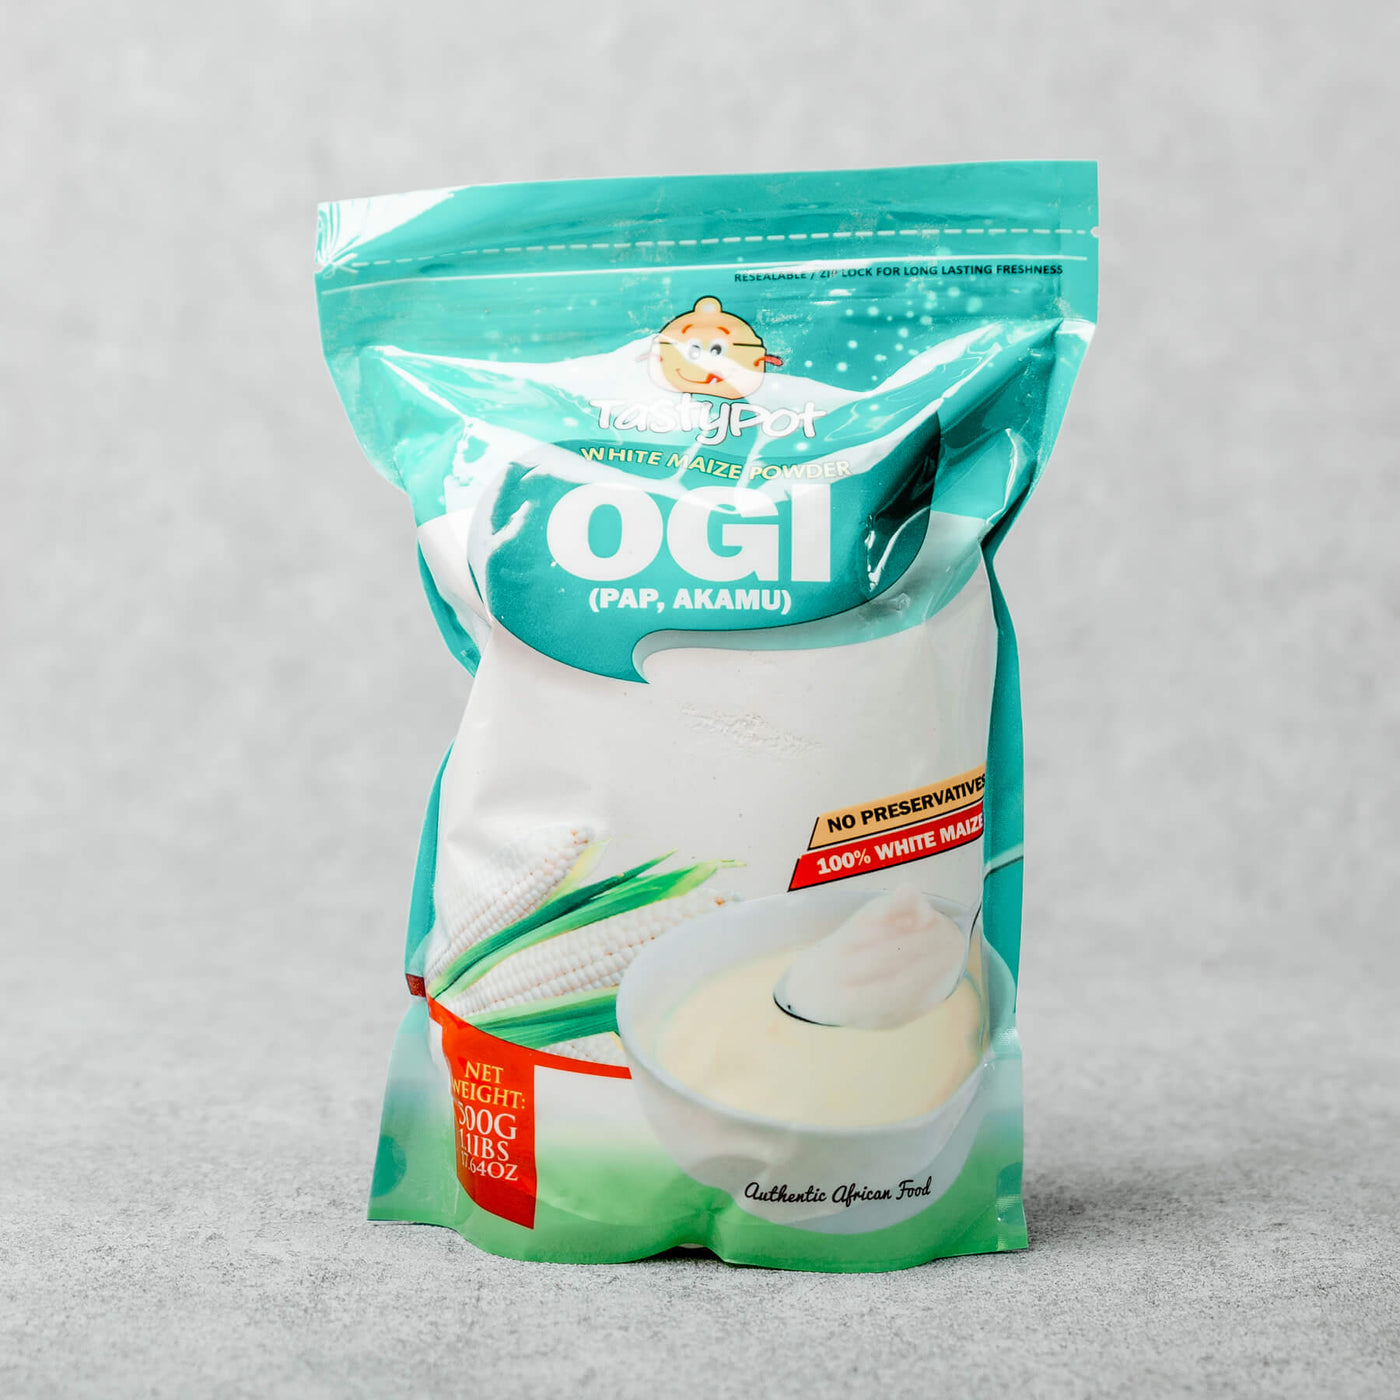 Tasty Pot - Ogi (Papa, Akamu)